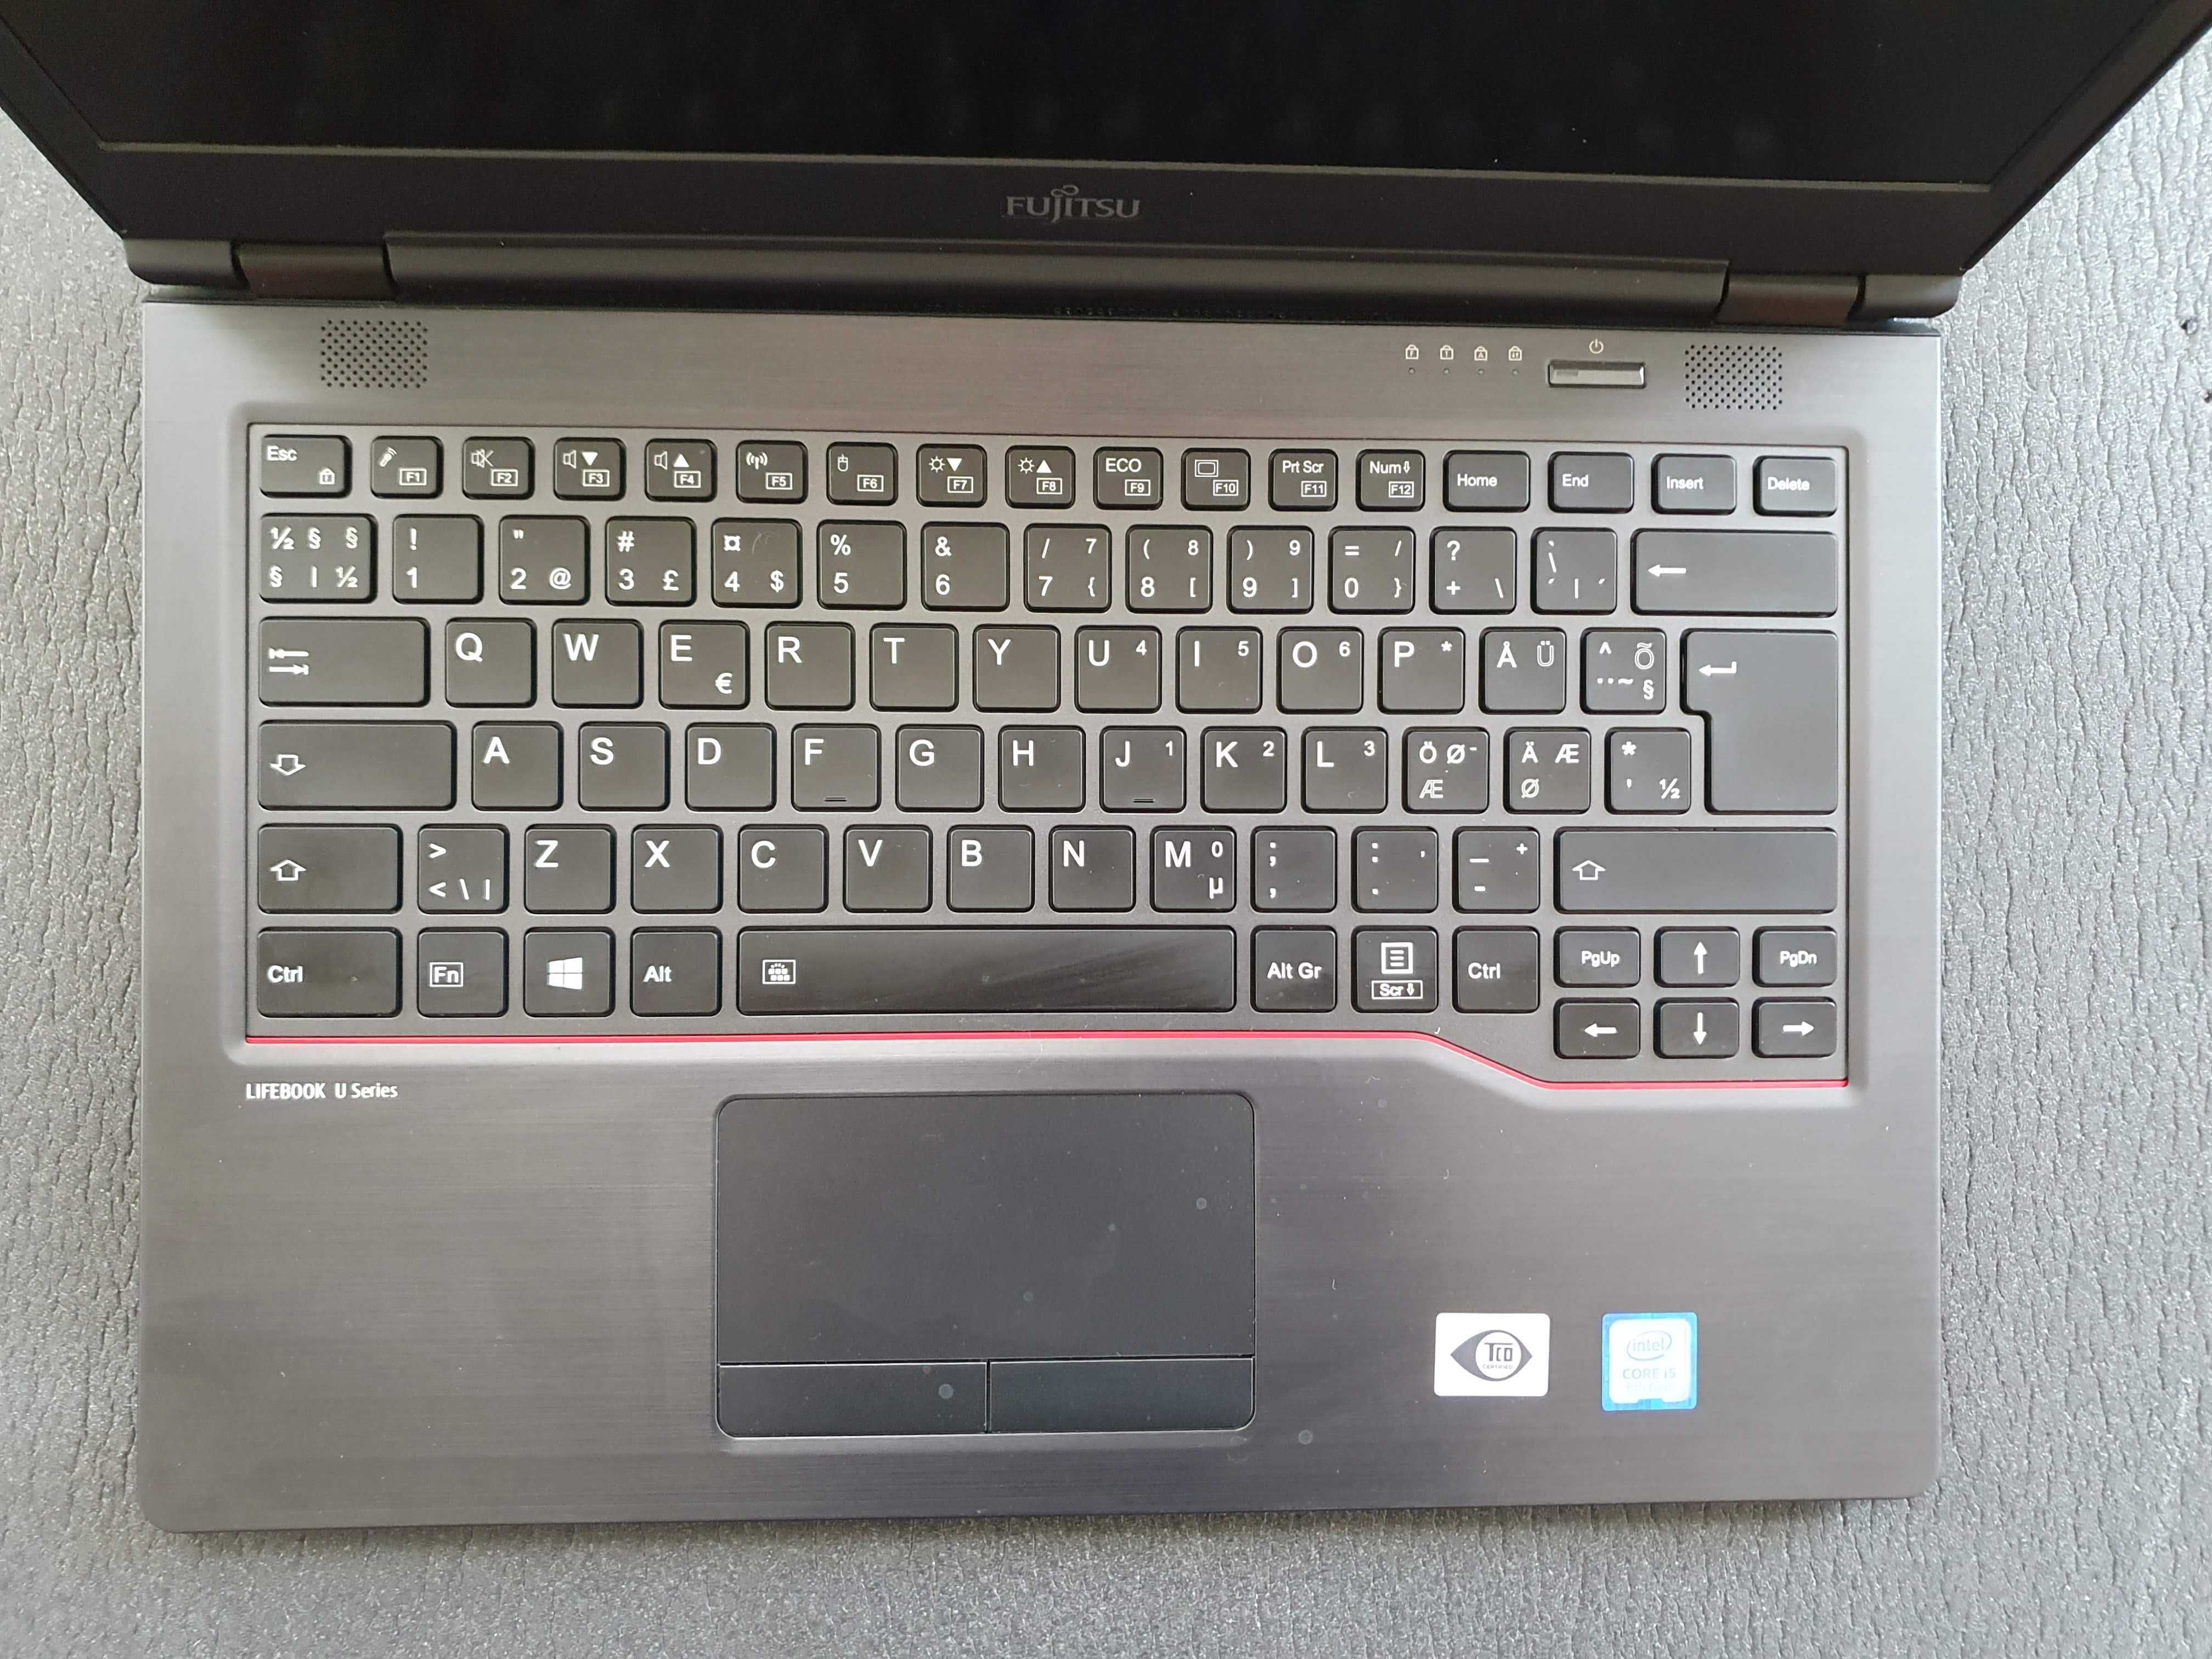 Fujitsu LifeBook U748